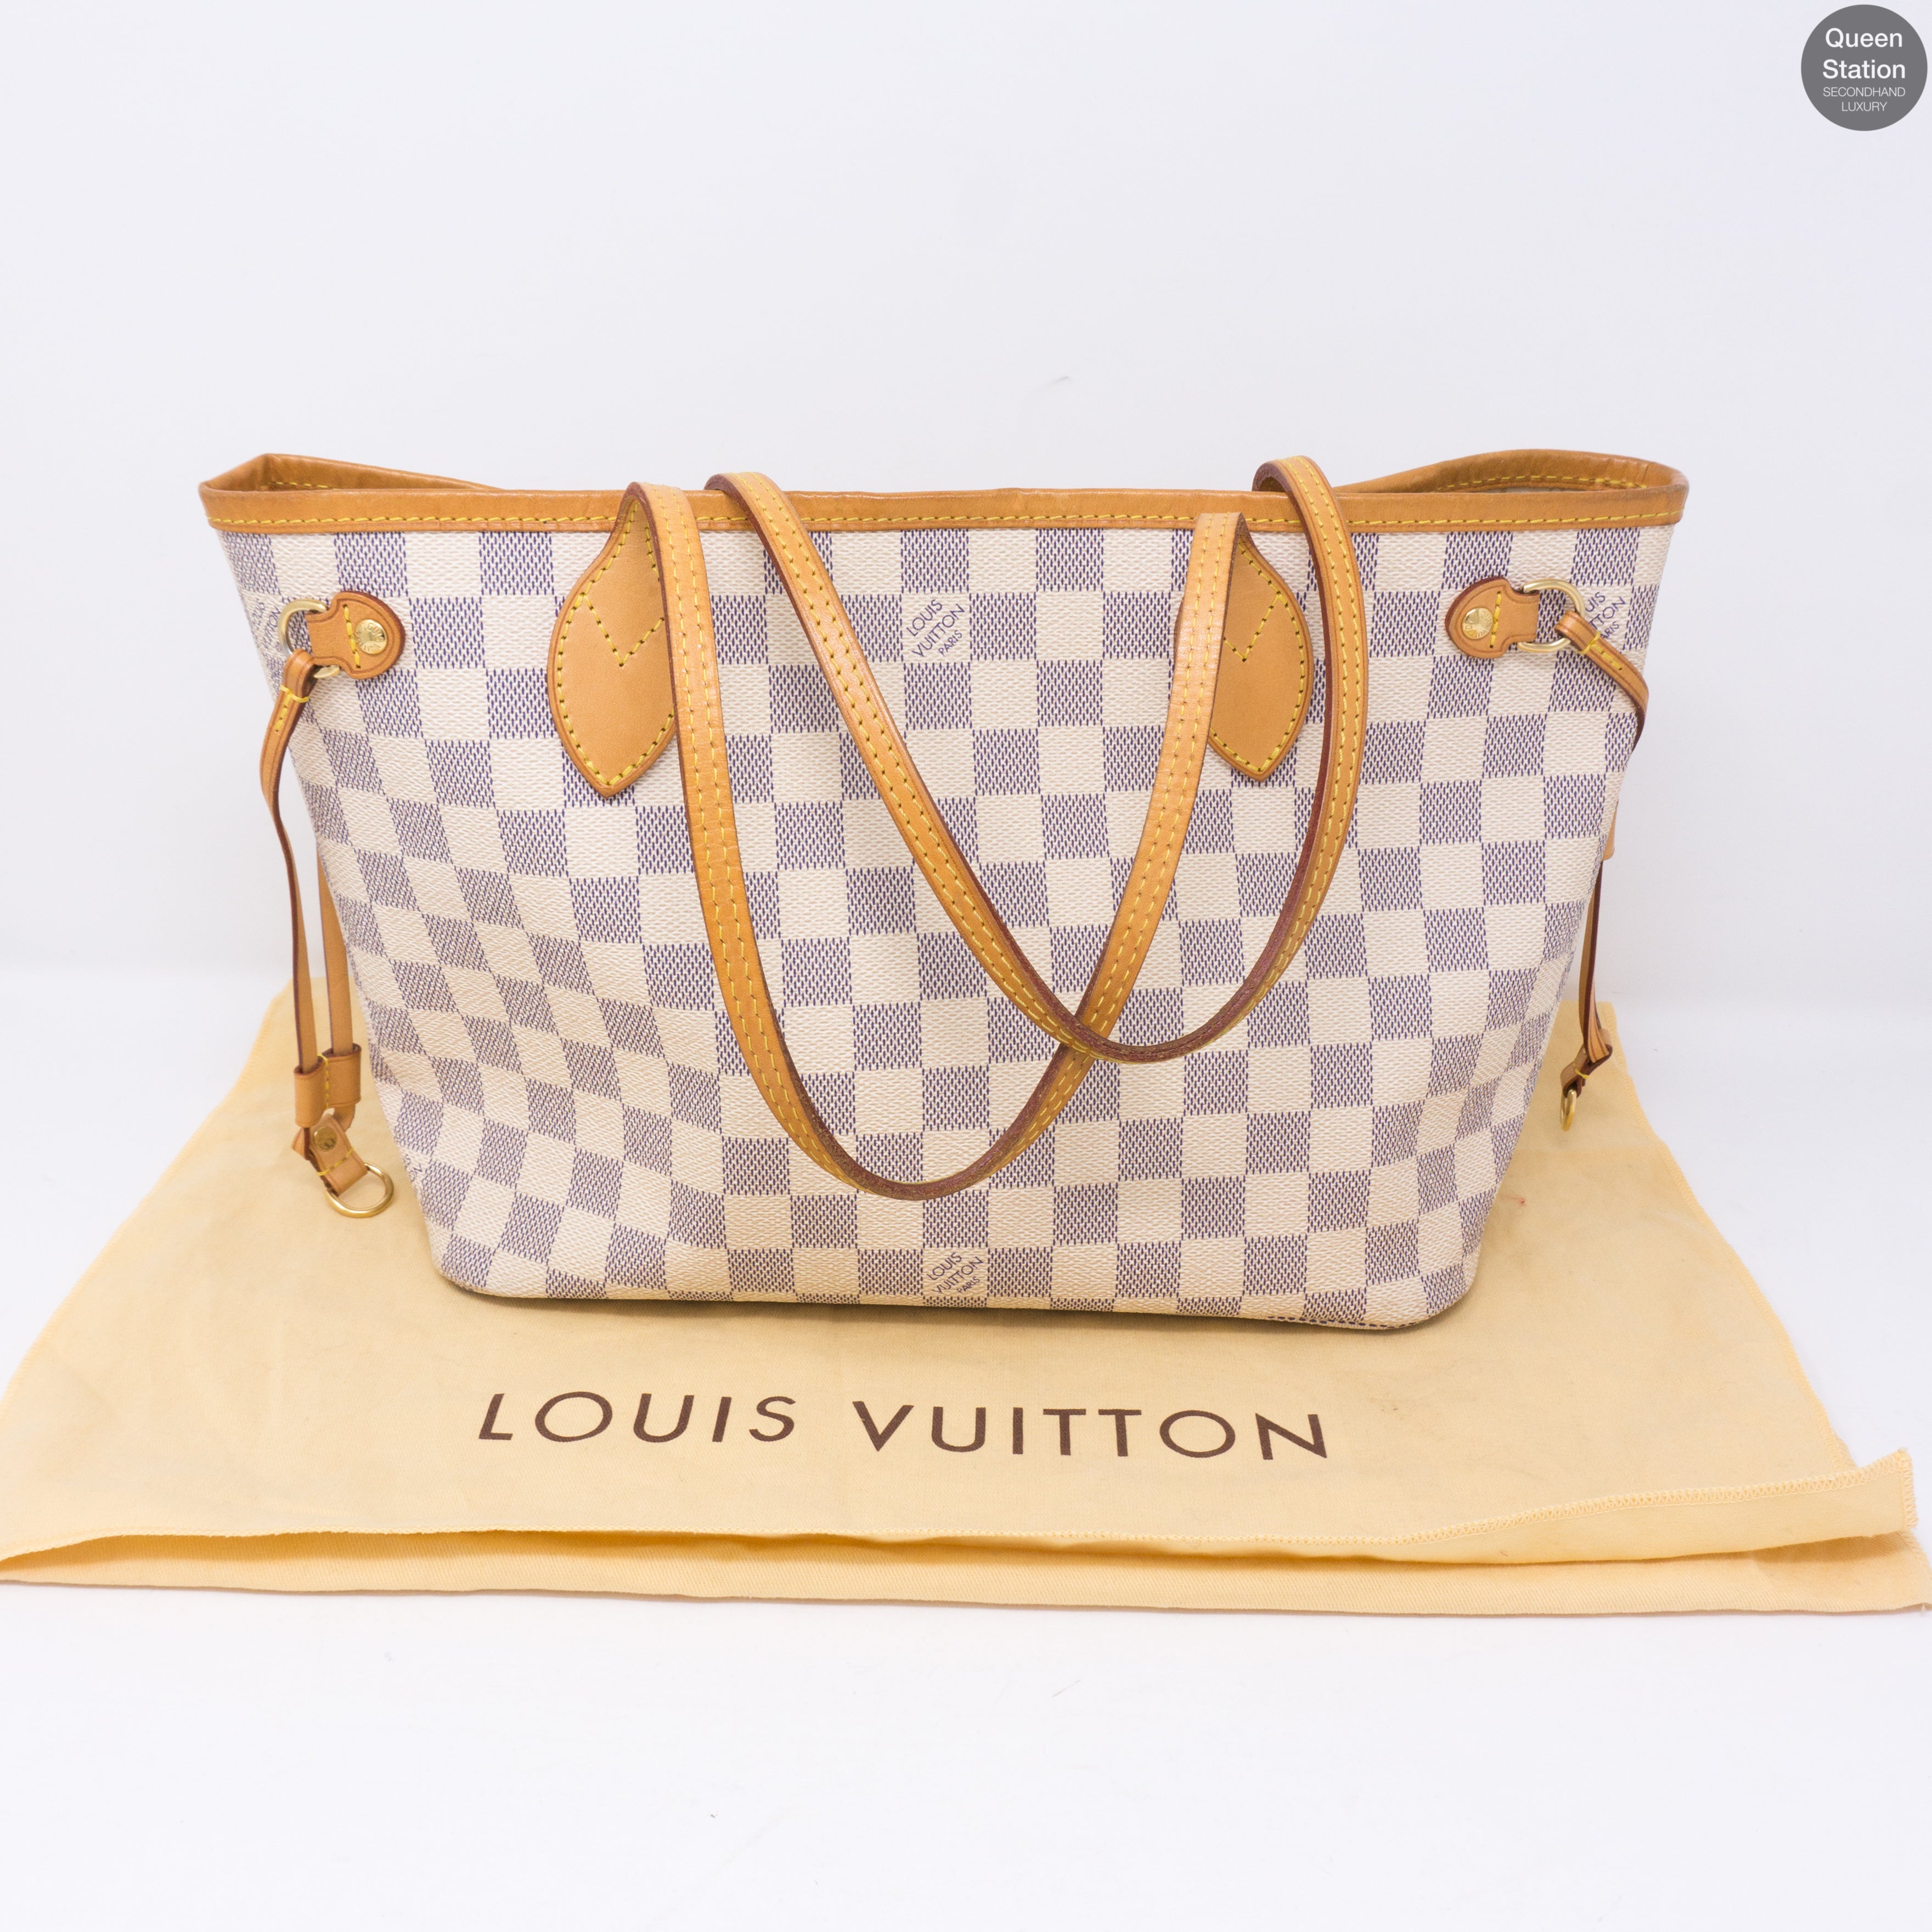 Shop Louis Vuitton DAMIER AZUR Neverfull pm (N41359) by magentabea